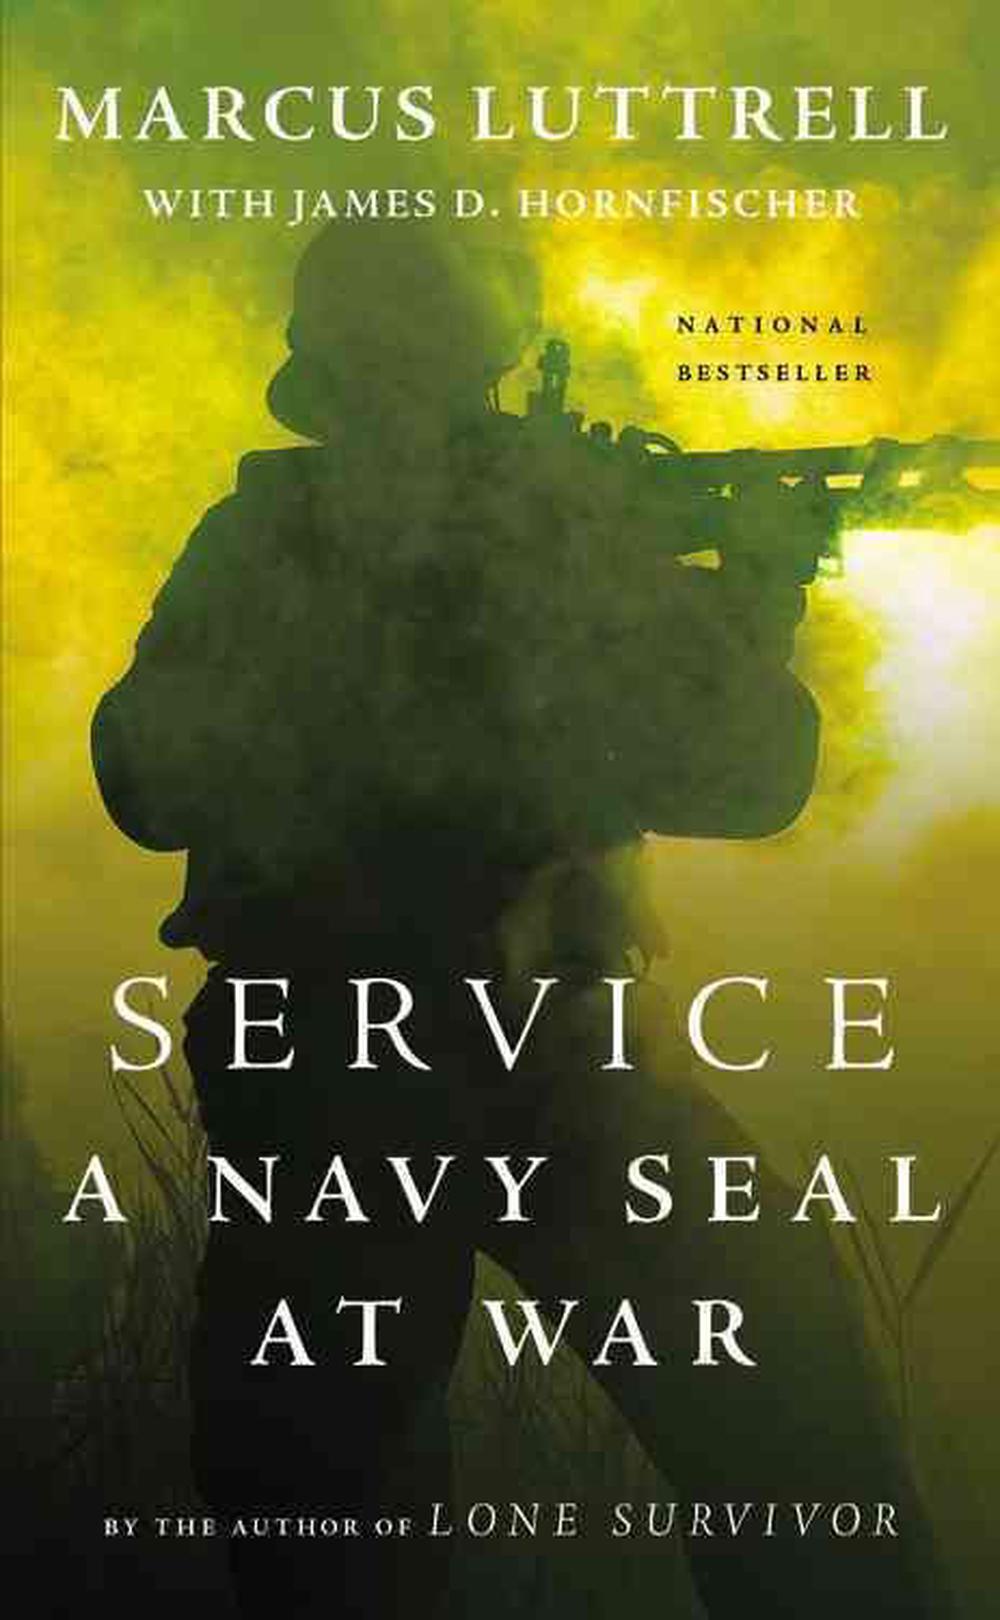 service a navy seal at war summary